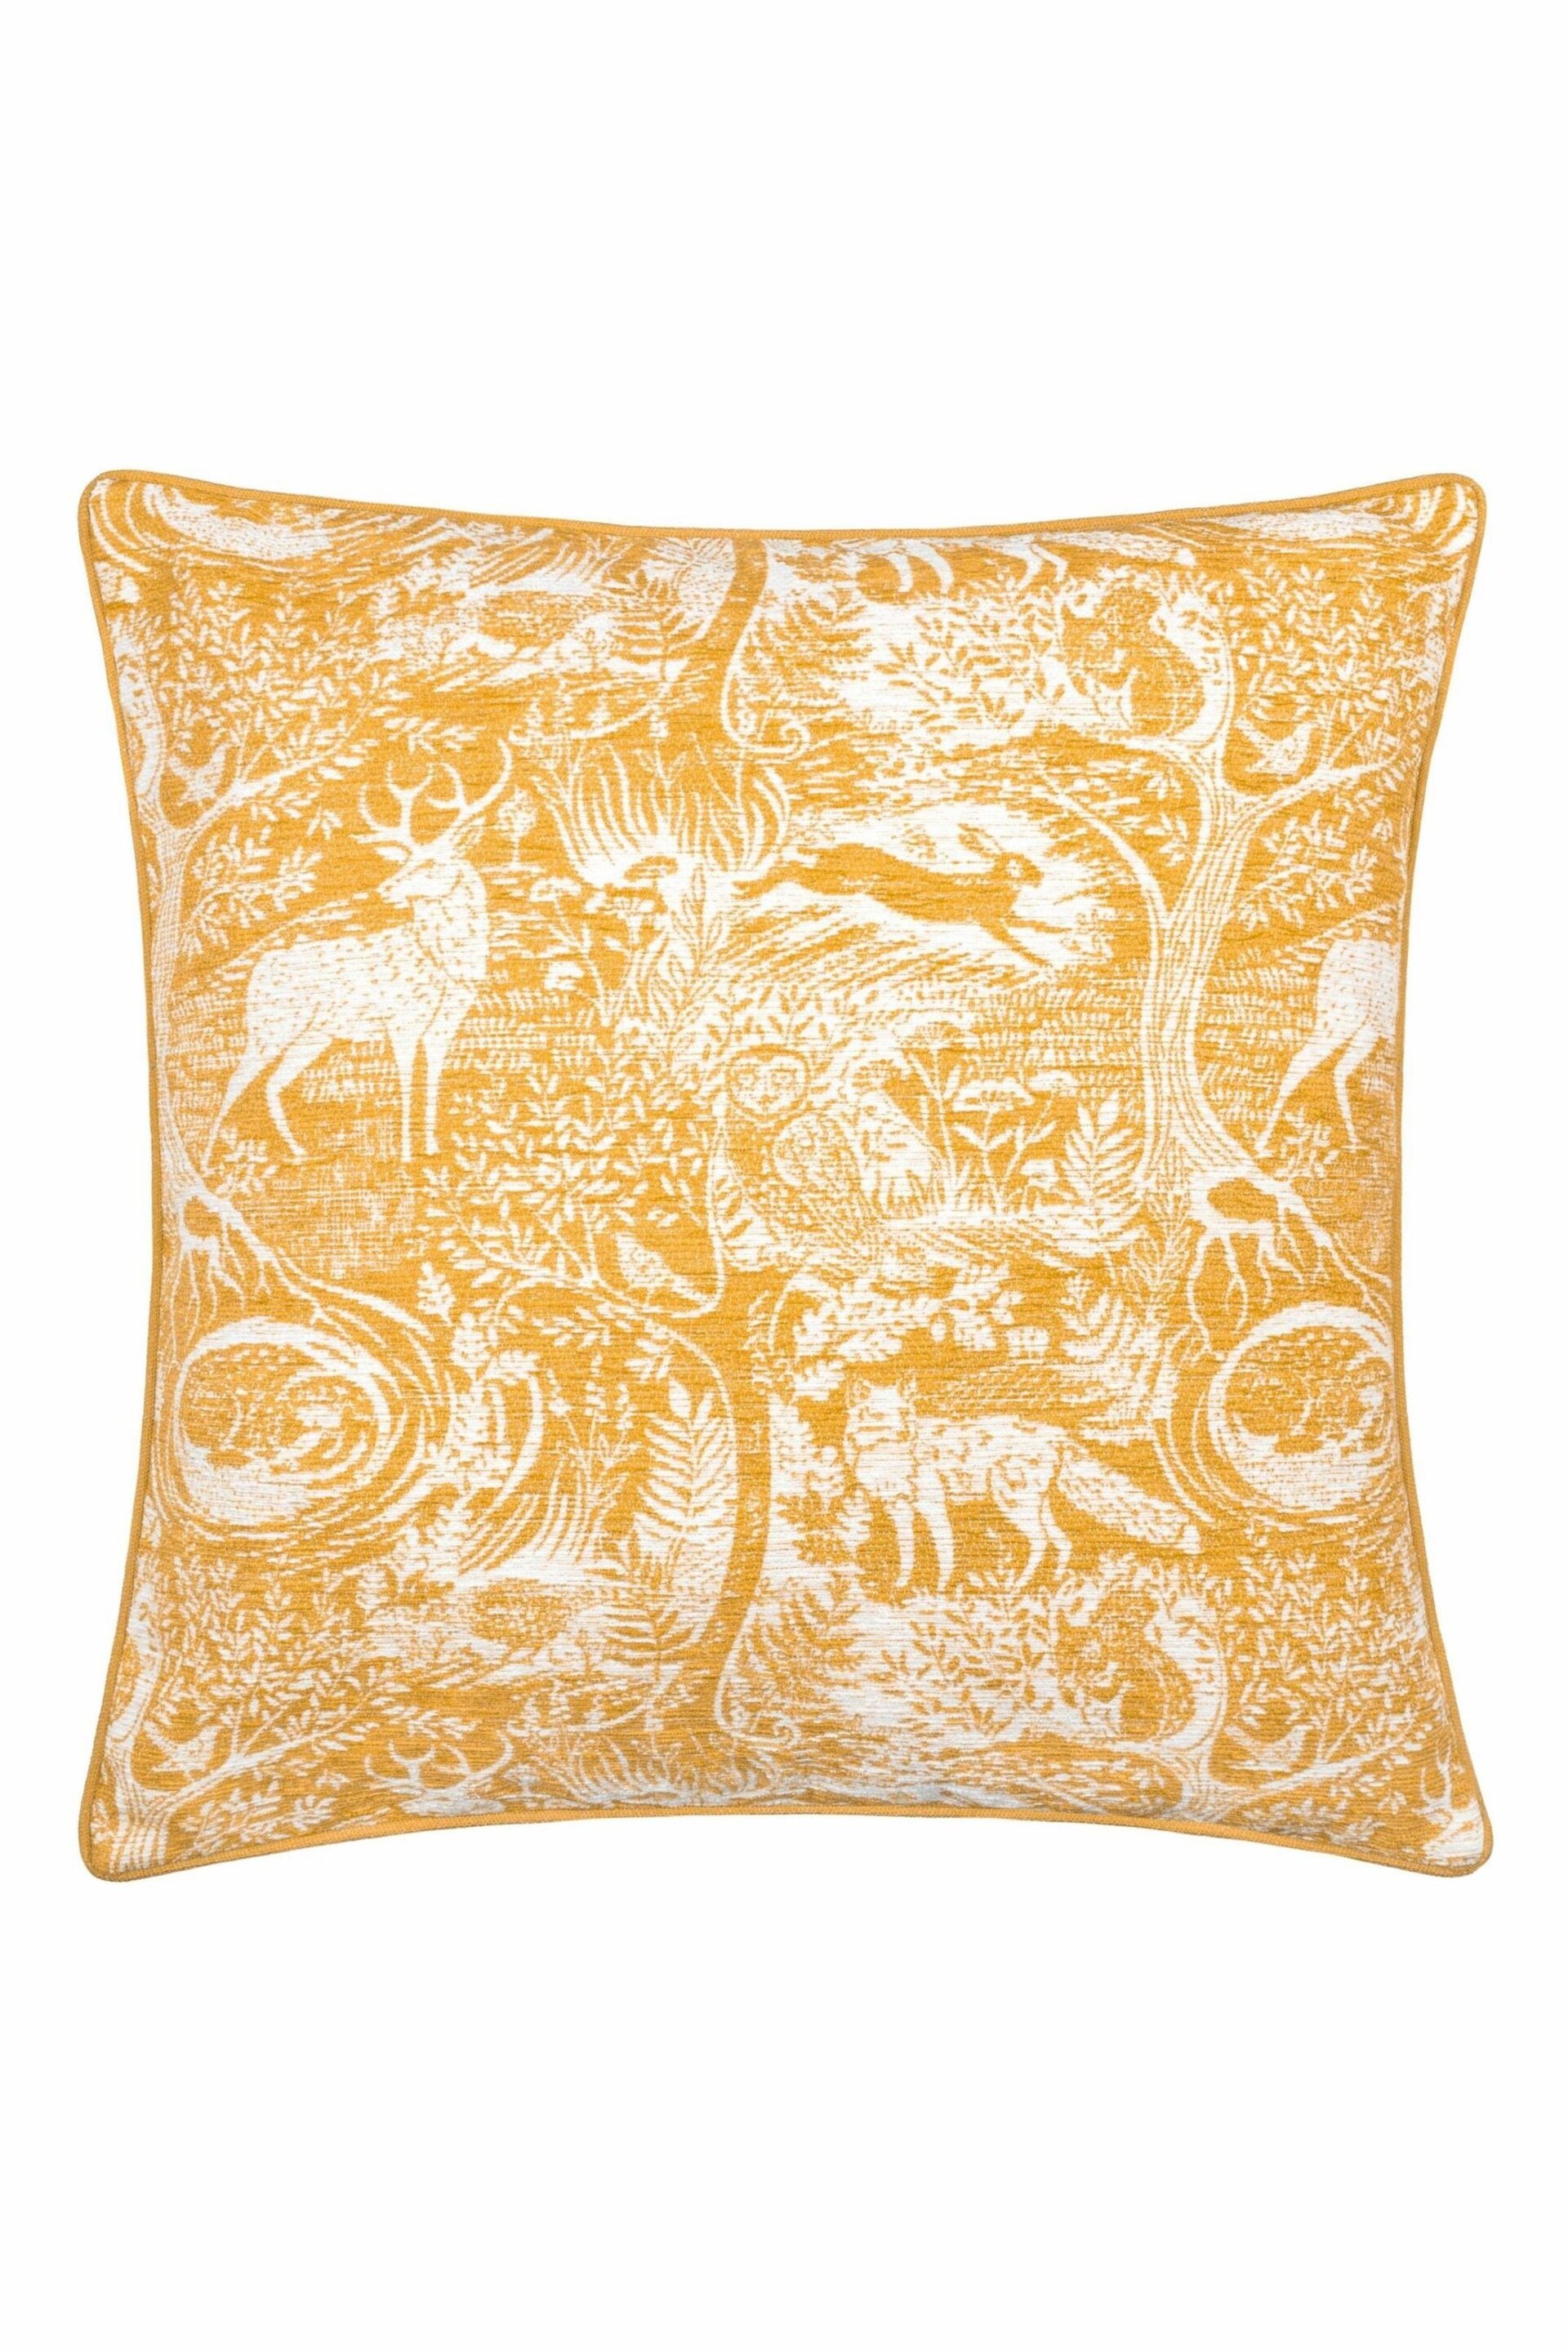 furn. Ochre Yellow Winter Woods Animal Chenille Cushion - Image 2 of 6